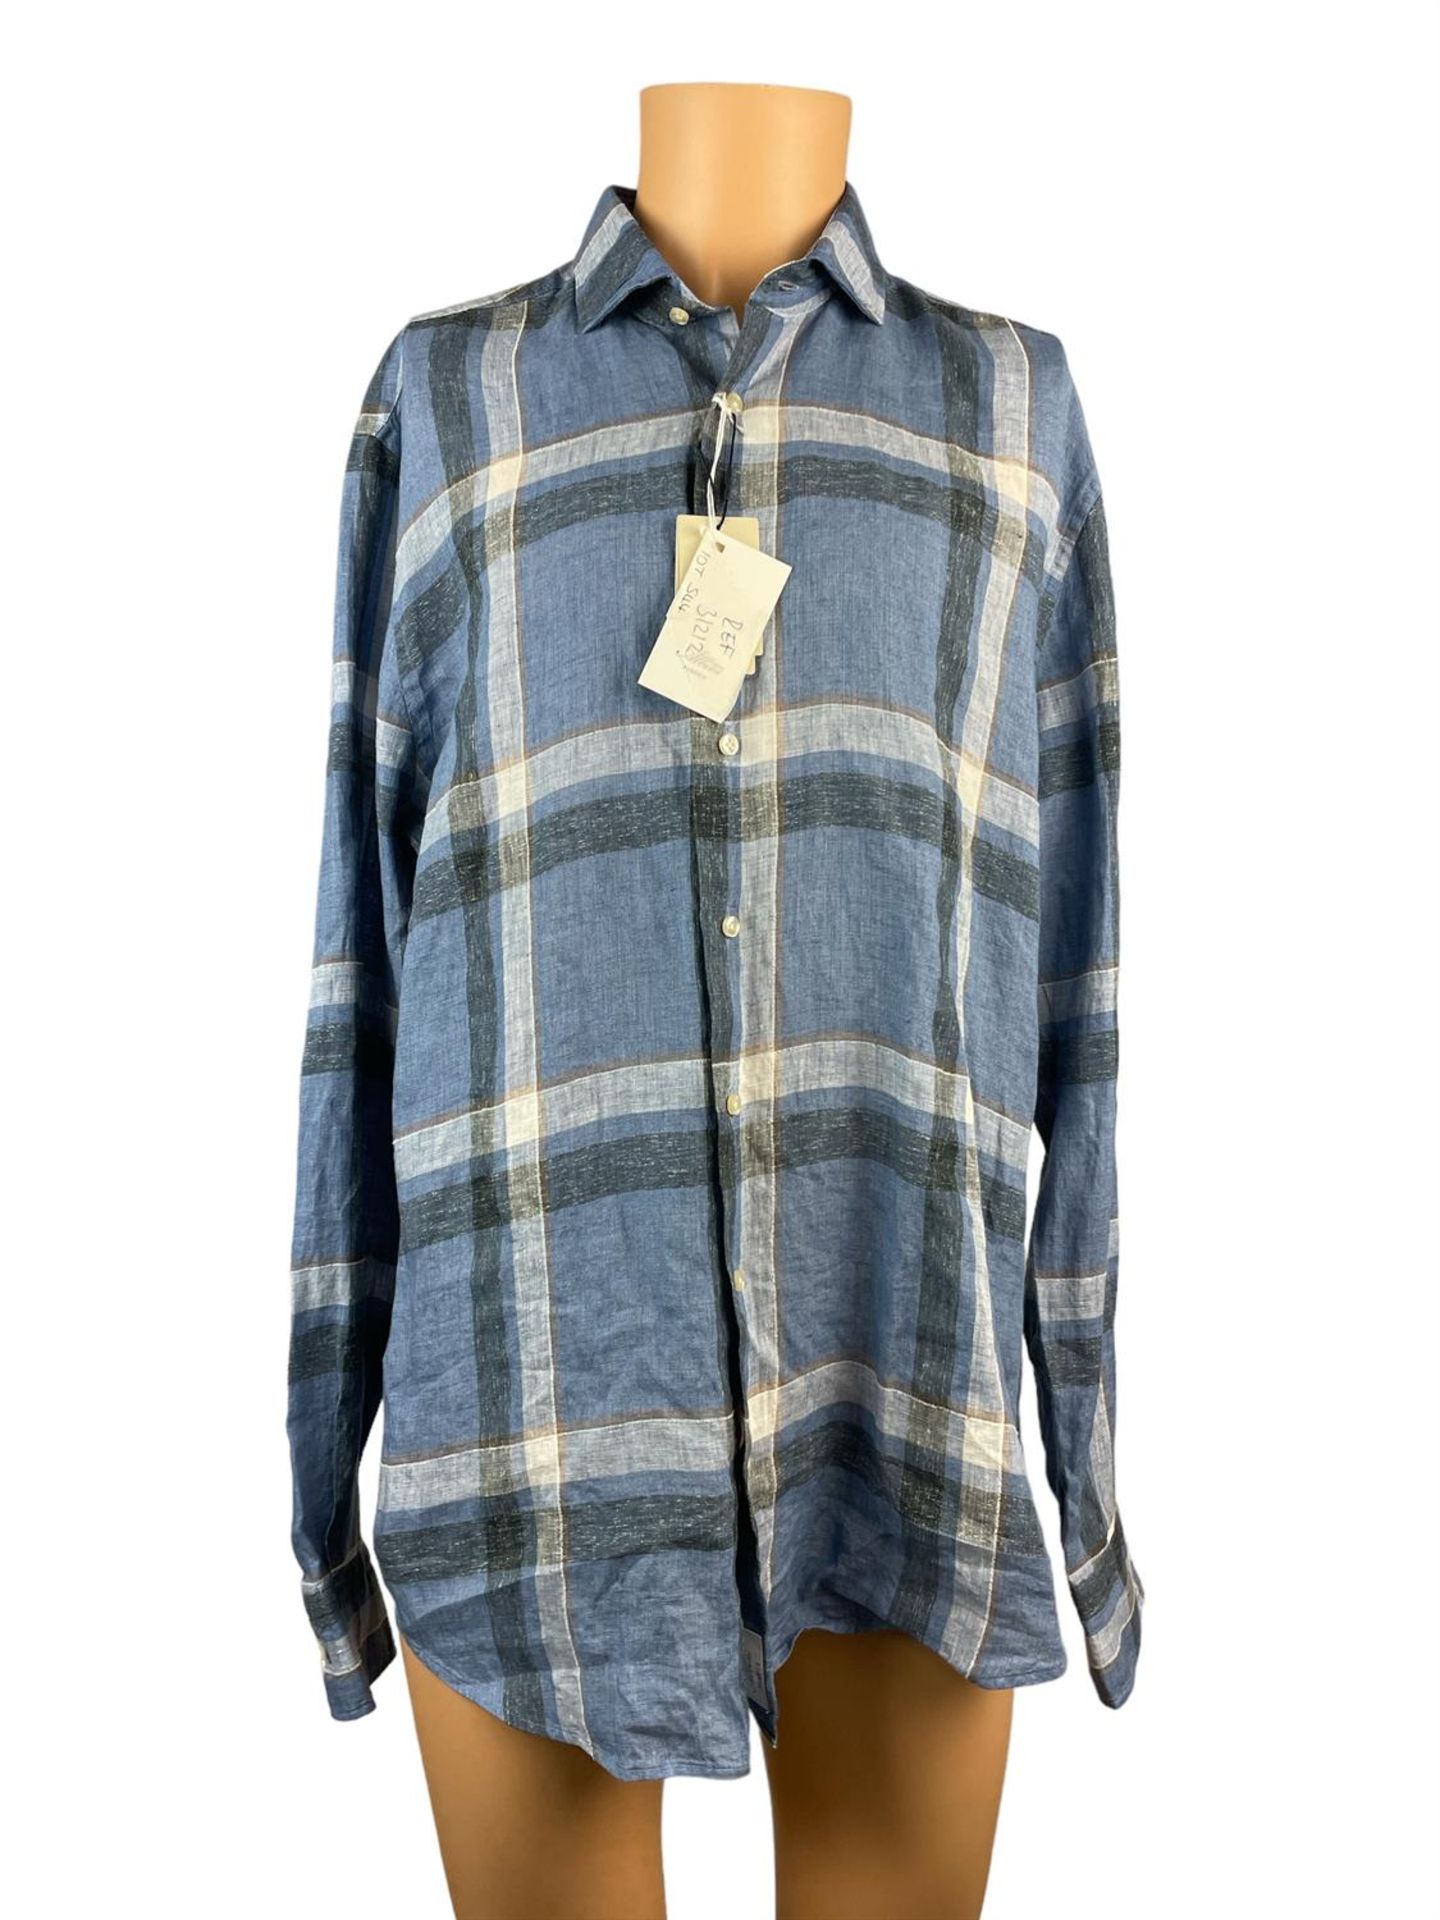 Thomas Maine Blue Check Long Sleeve Shirt - Size 15 1/2 - RRP £179.00